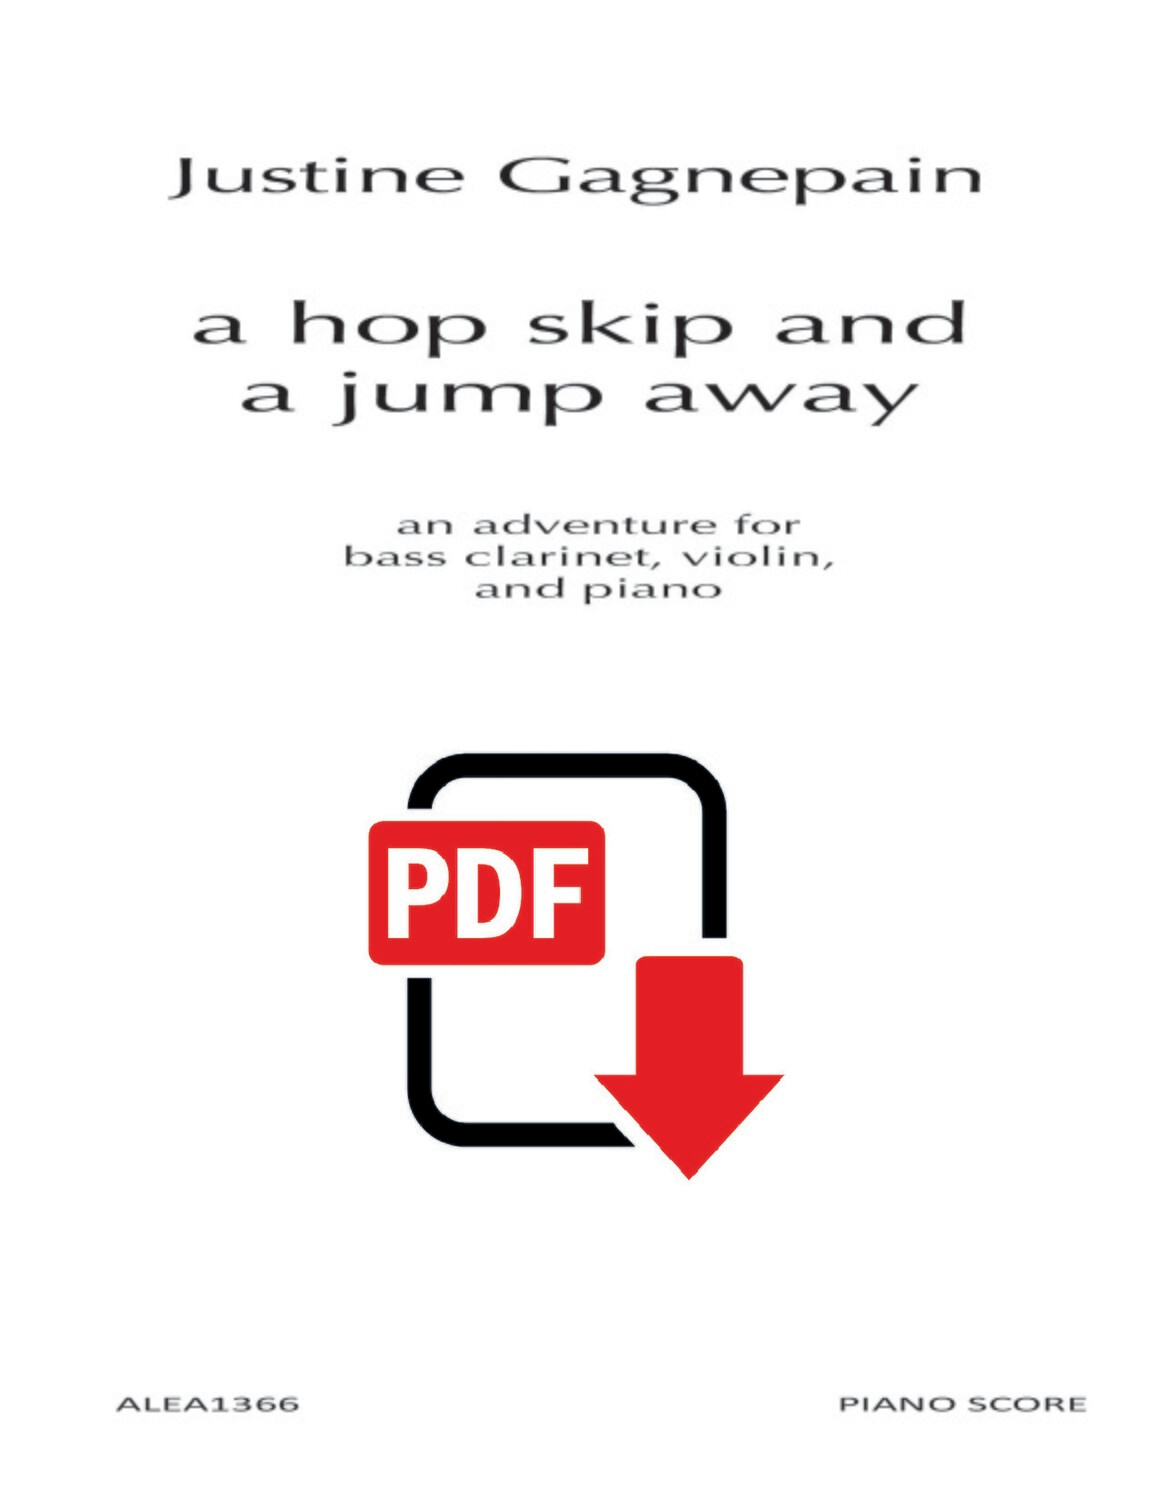 Gagnepain: a hop skip and a jump away (PDF)